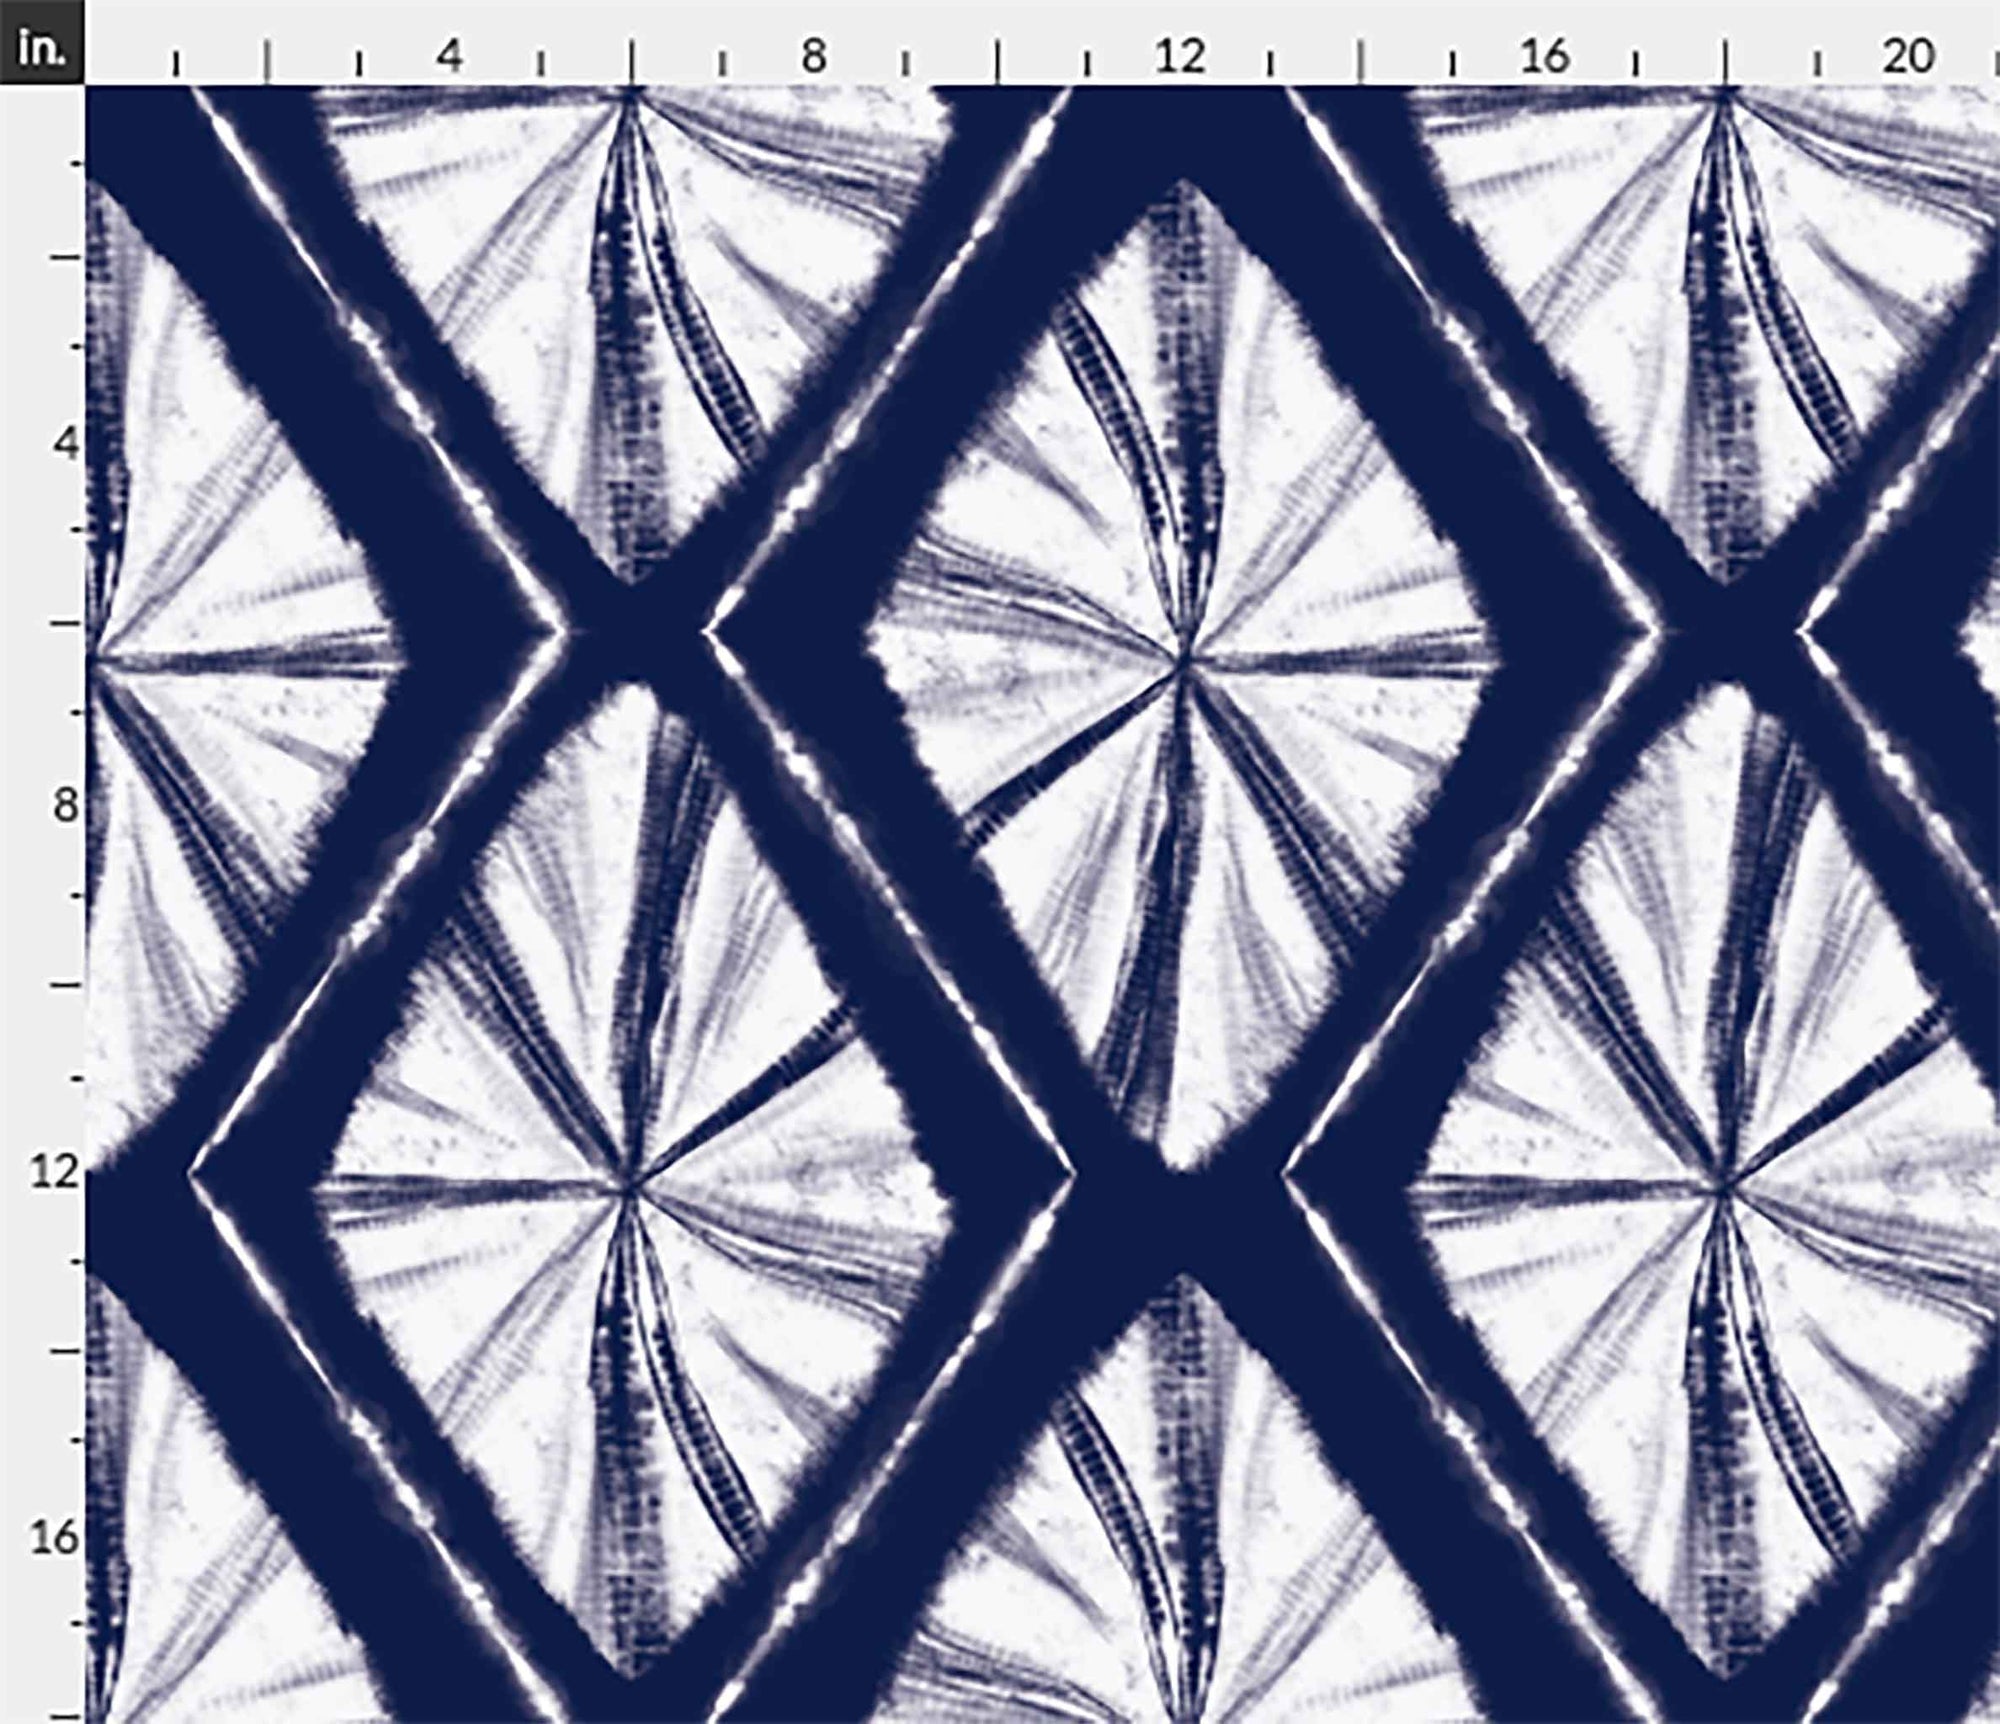 Shibori Indigo Tie Dye Diamonds Pattern Peel & Stick and Pre-Pasted Wallpaper scale example